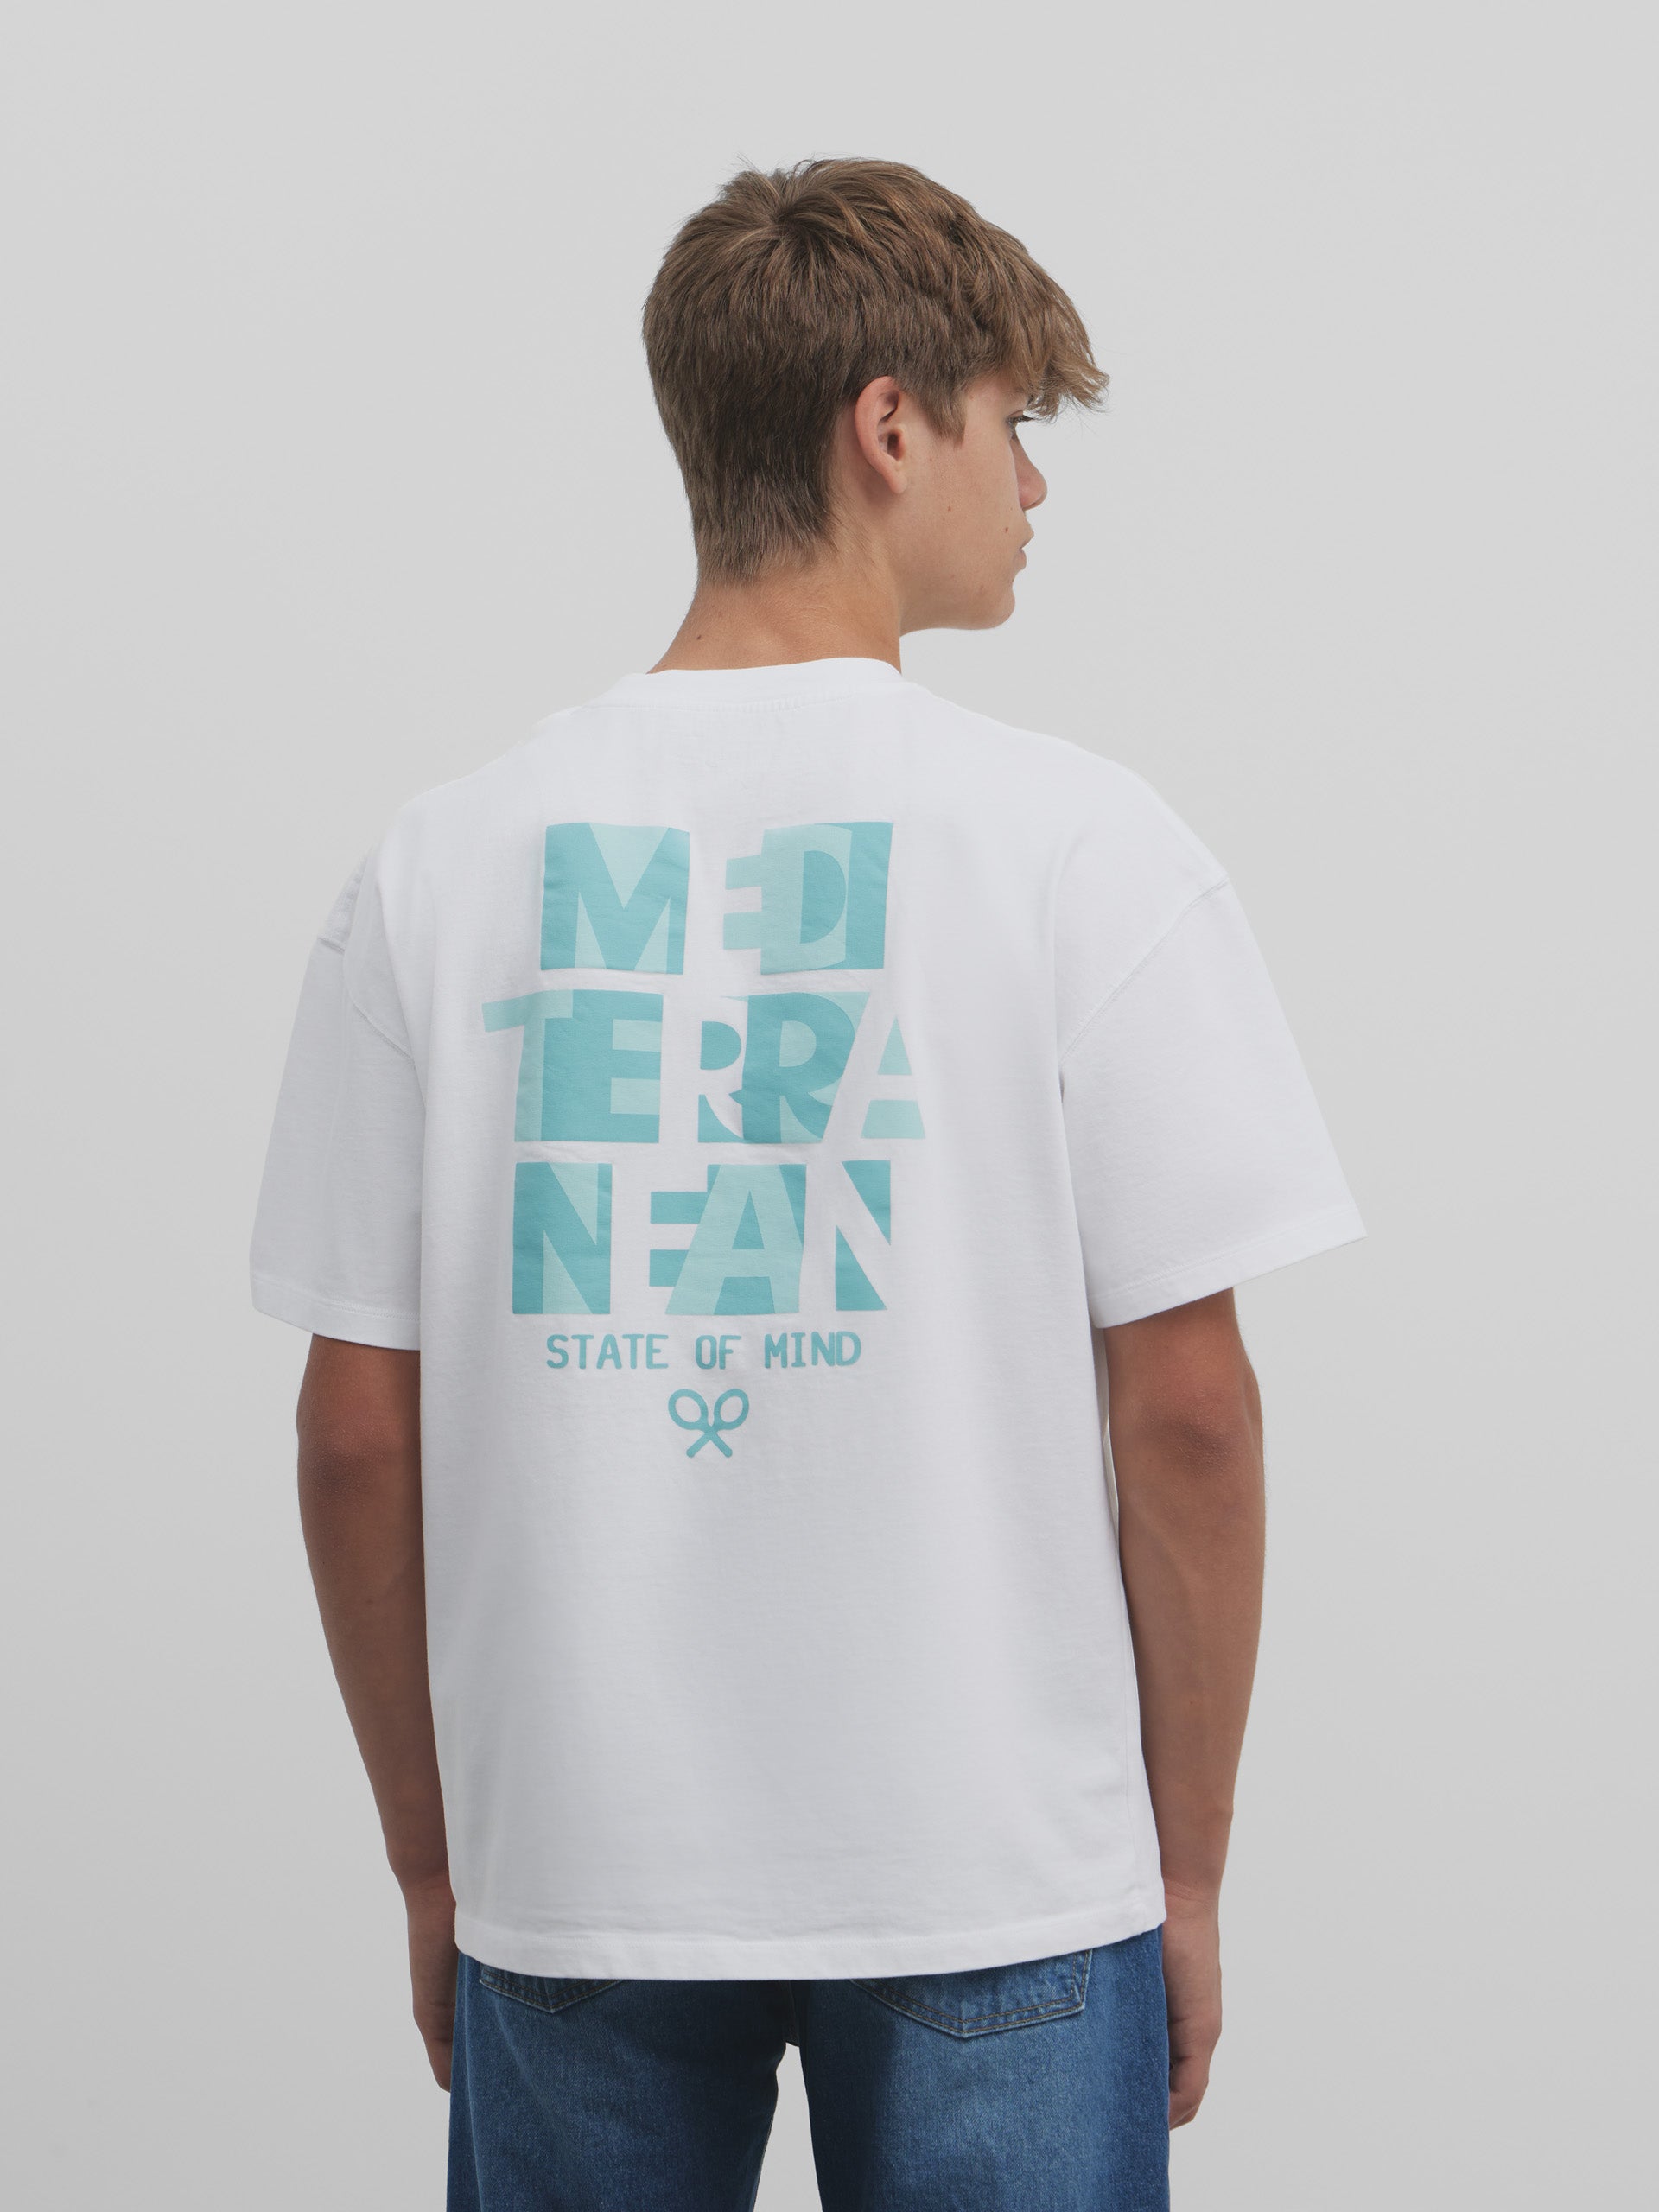 Special fit mediterranean white t-shirt